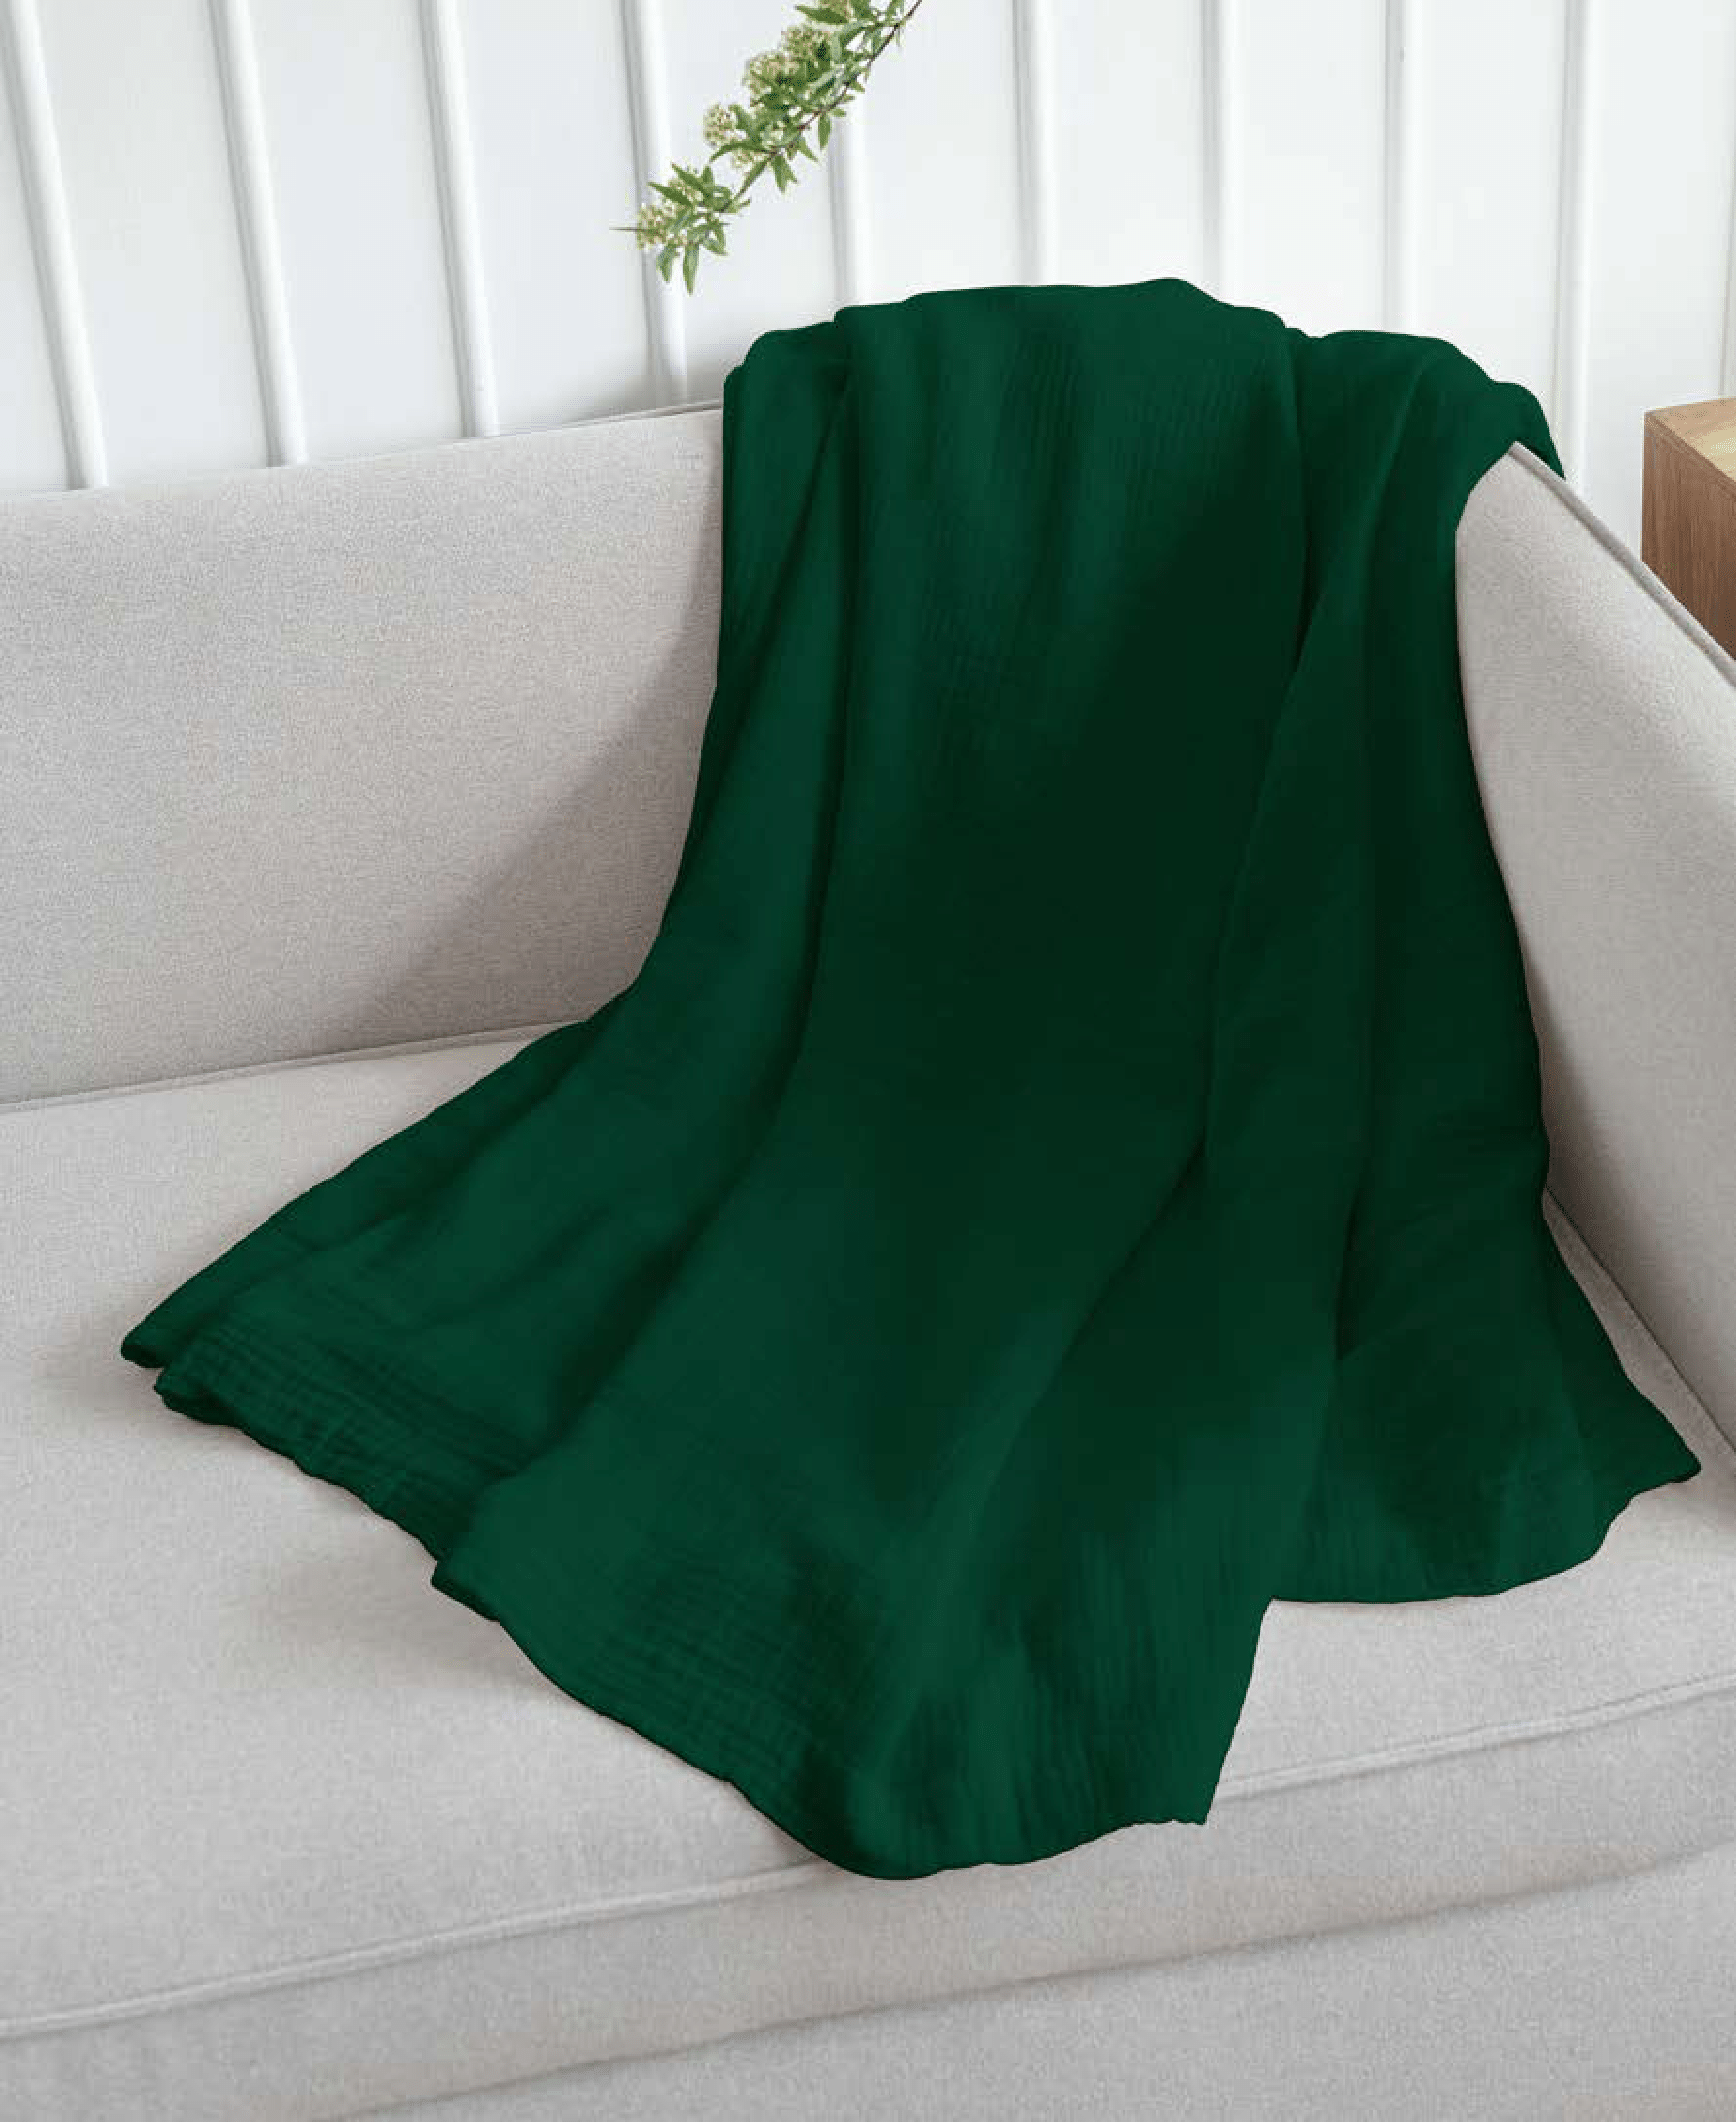 Green Blanket